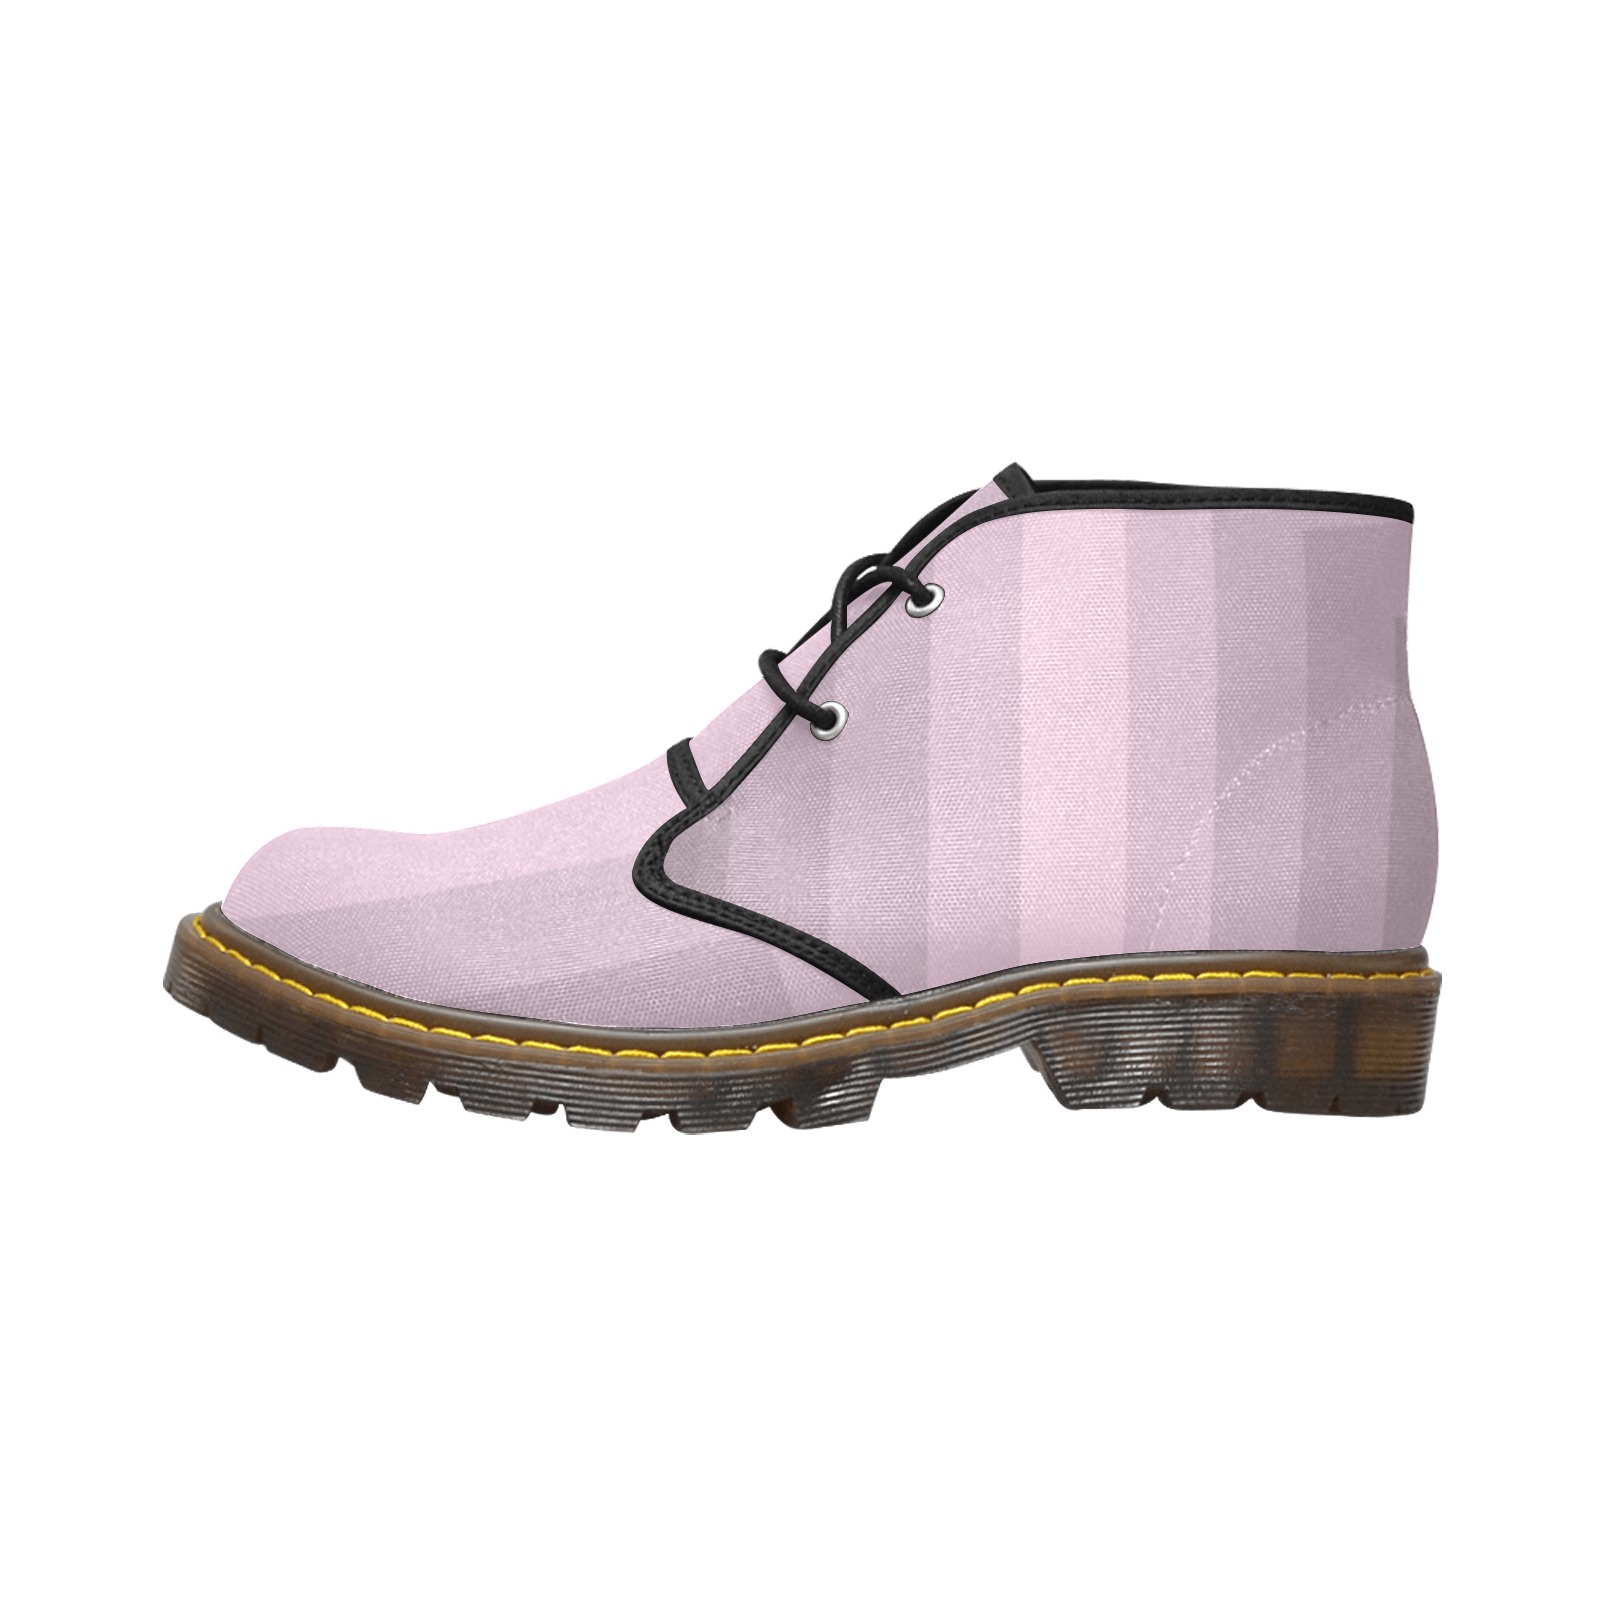 Women Chukka Boot - Pink Women's Canvas Chukka Boots (Model 2402-1)